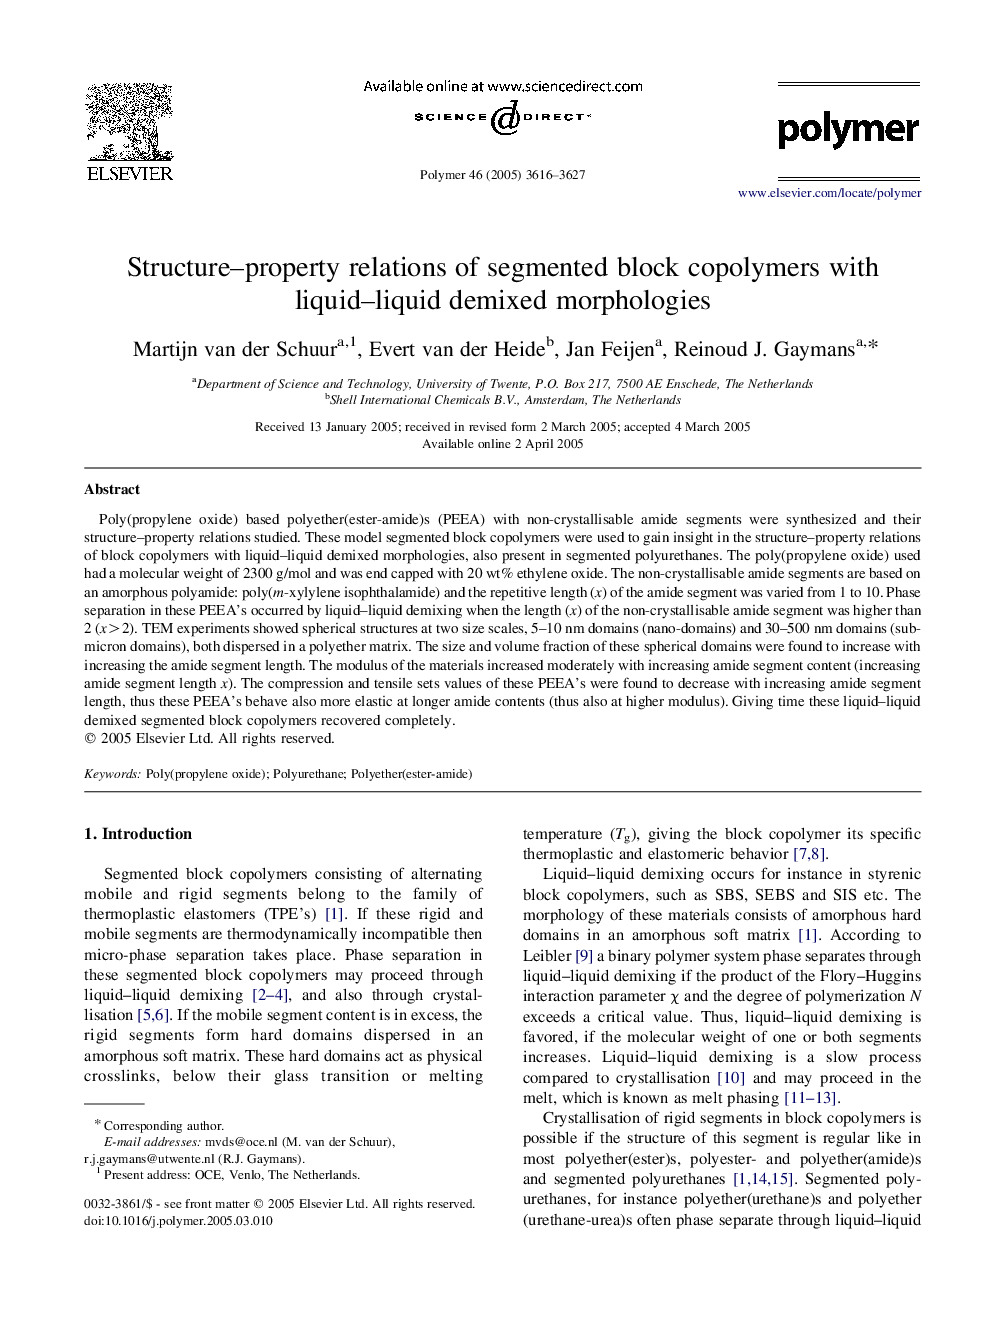 Structure-property relations of segmented block copolymers with liquid-liquid demixed morphologies